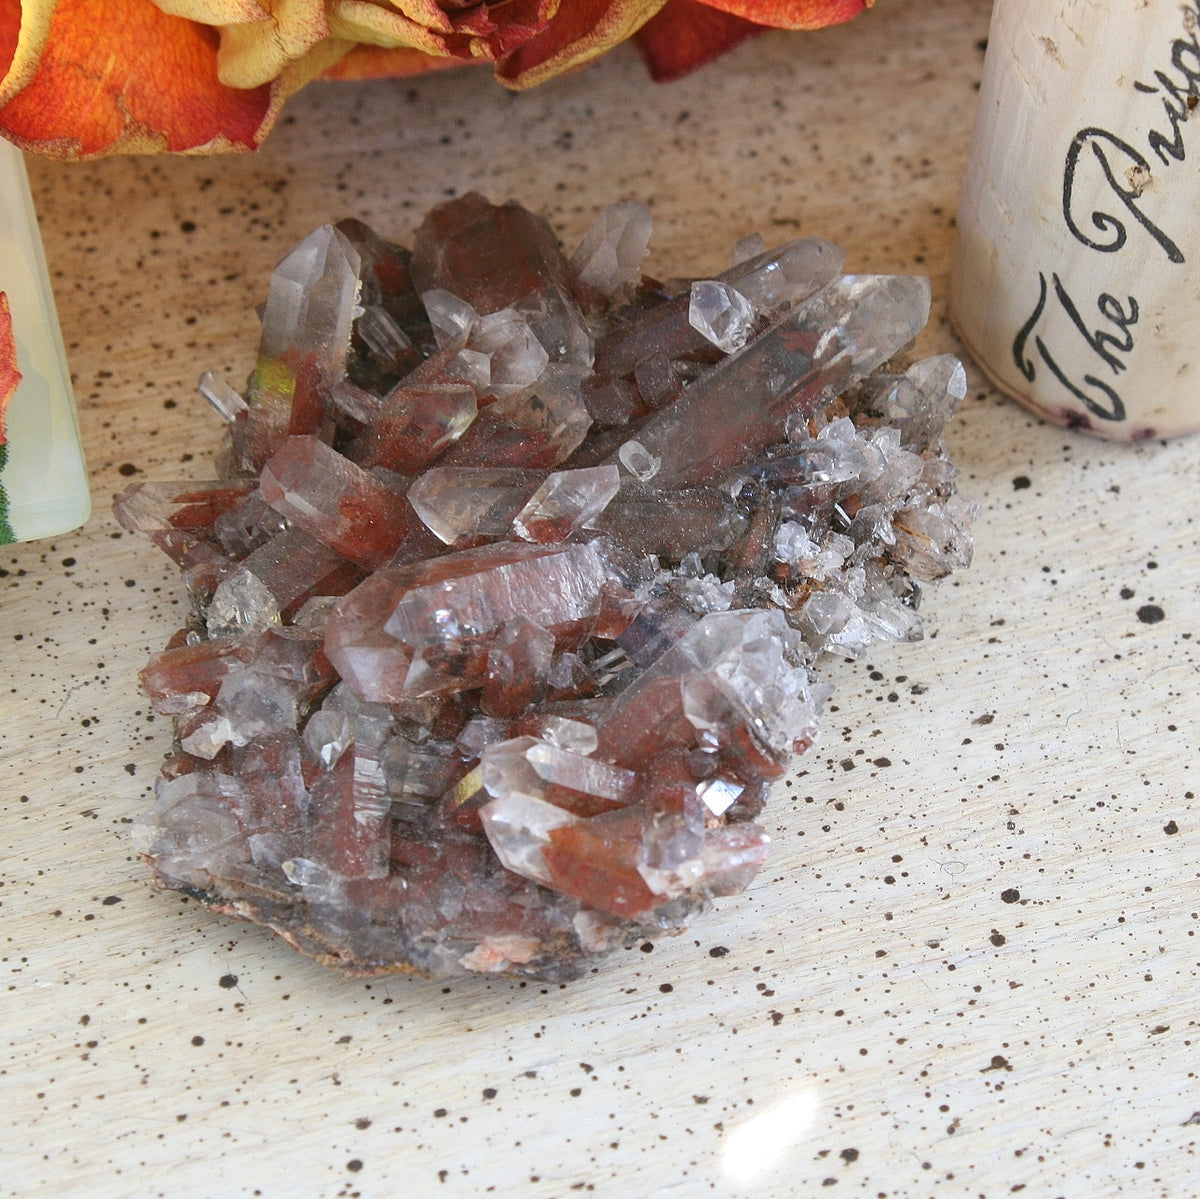 Orange River Quartz with Hematite Inclusions / Phantoms, Northern Cape, South Africa, 31.6 grams